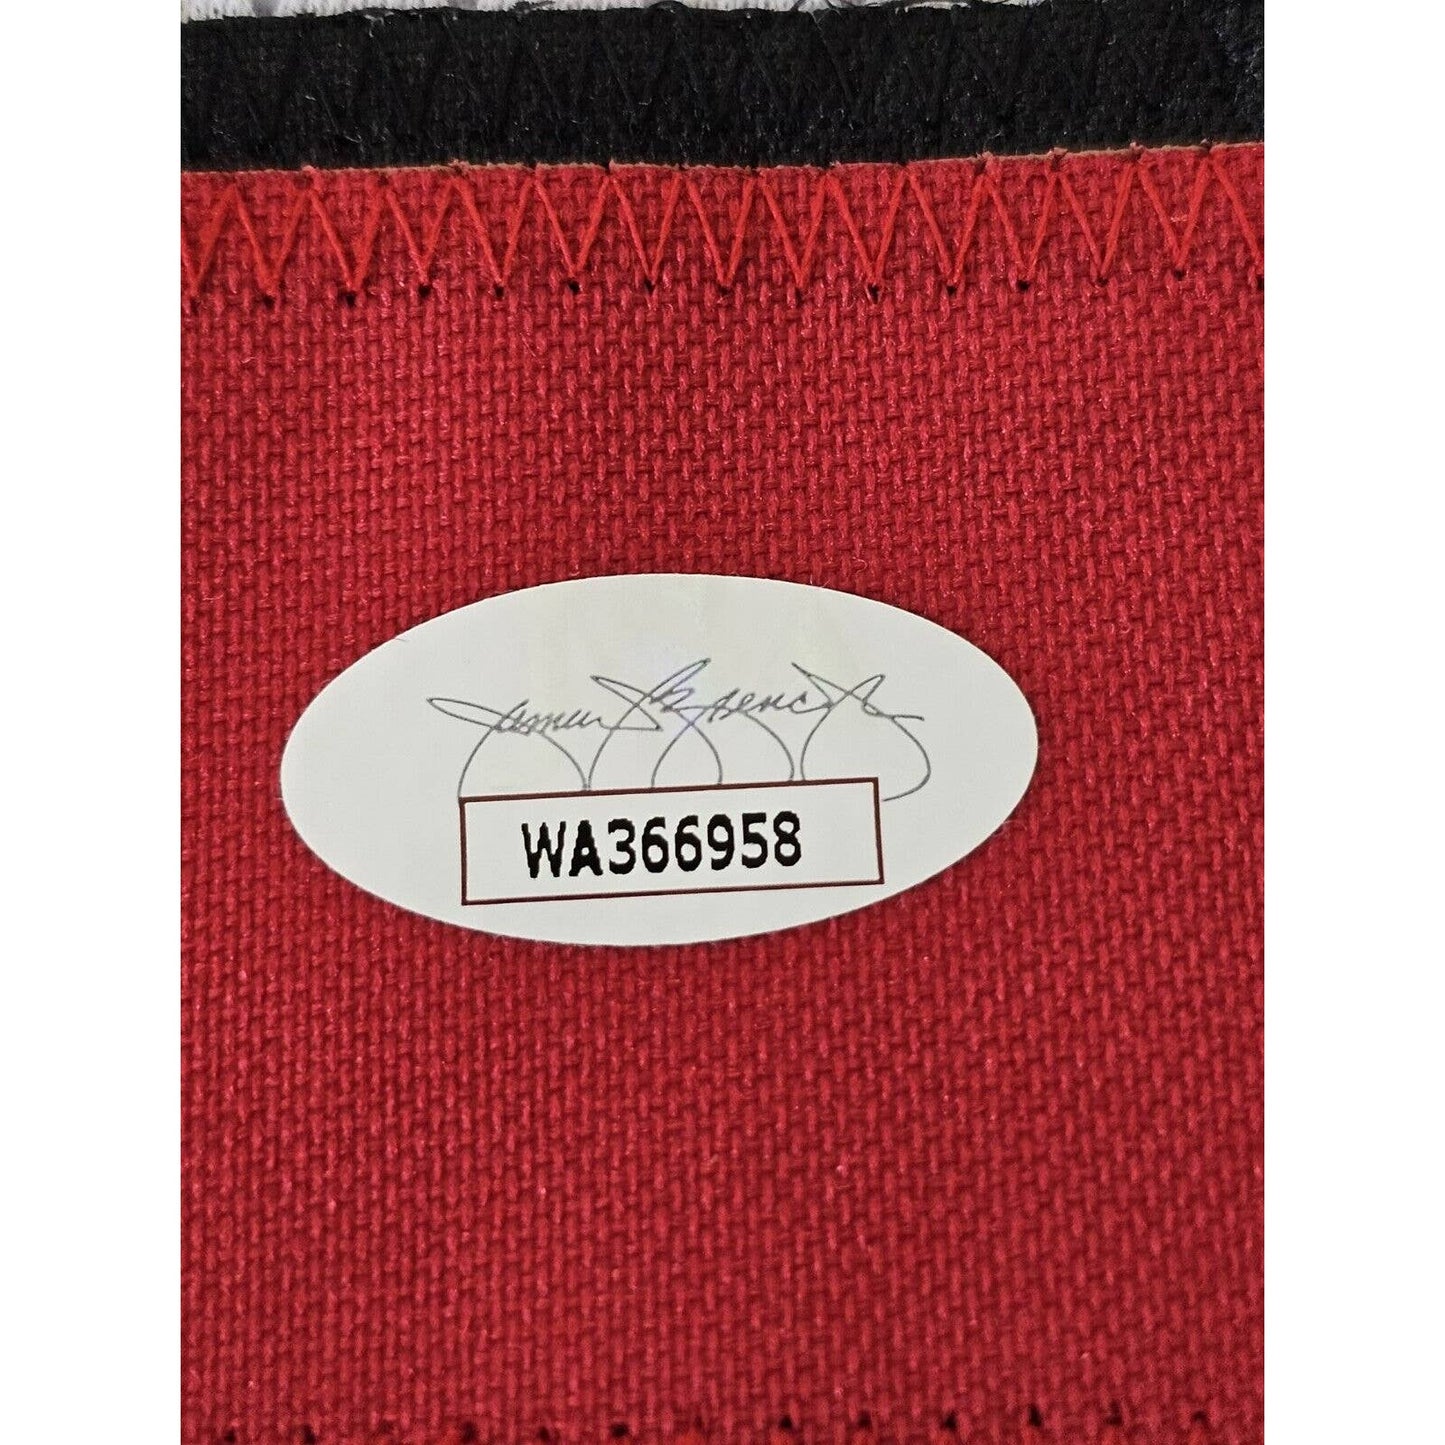 Aeneas Williams Autographed/Signed Jersey JSA COA Arizona Cardinals Chicago